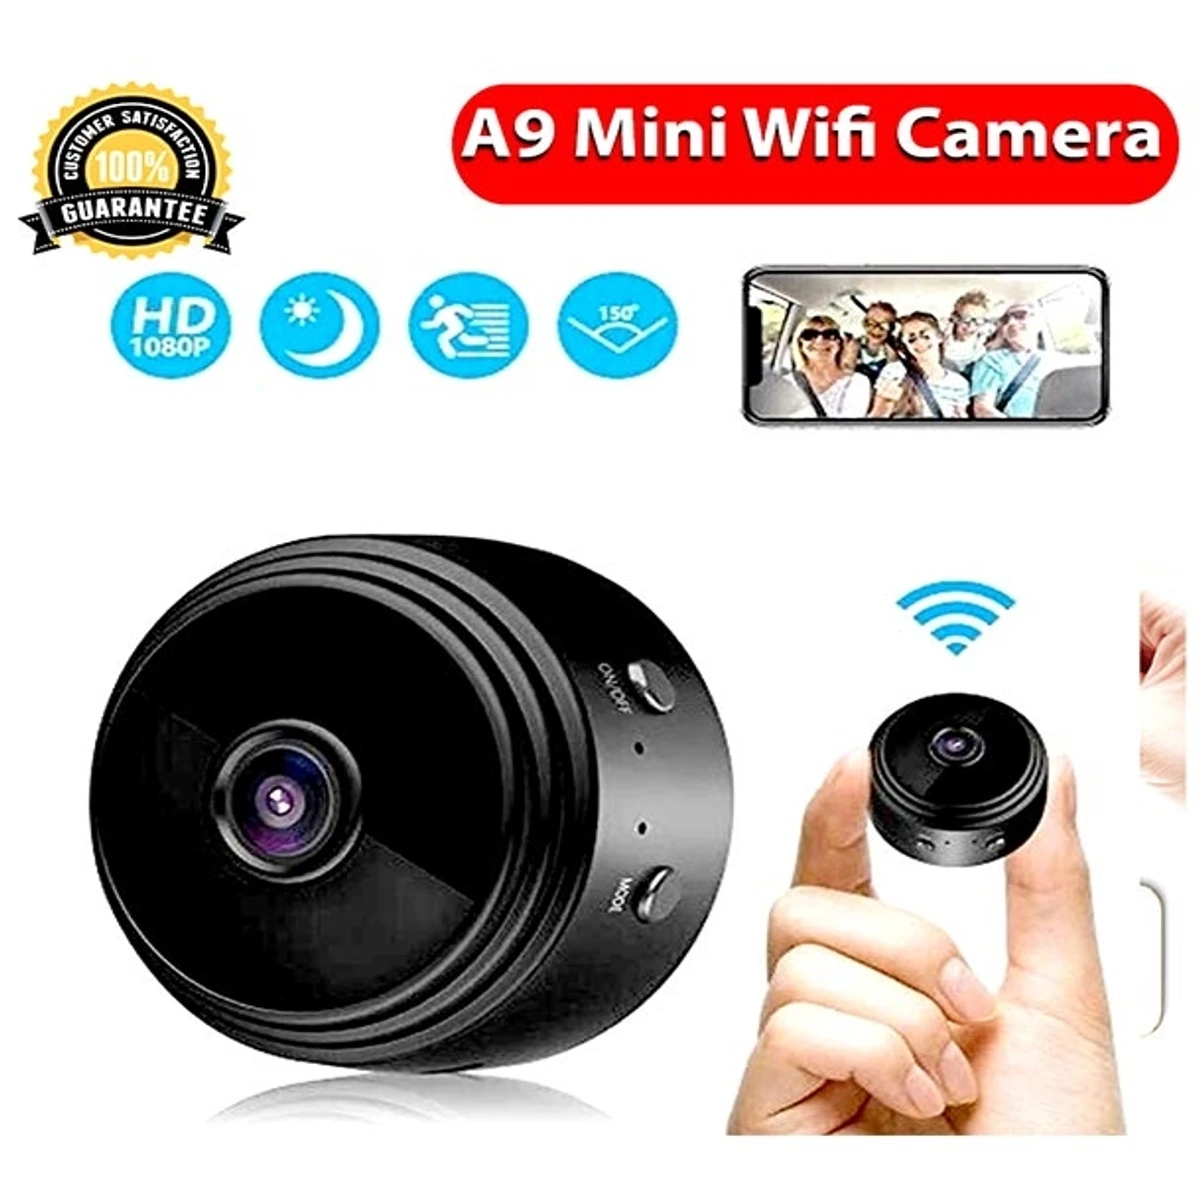 A9 Mini WiFi Camera 1080P Full HD Night Vision Wireless IP Camera